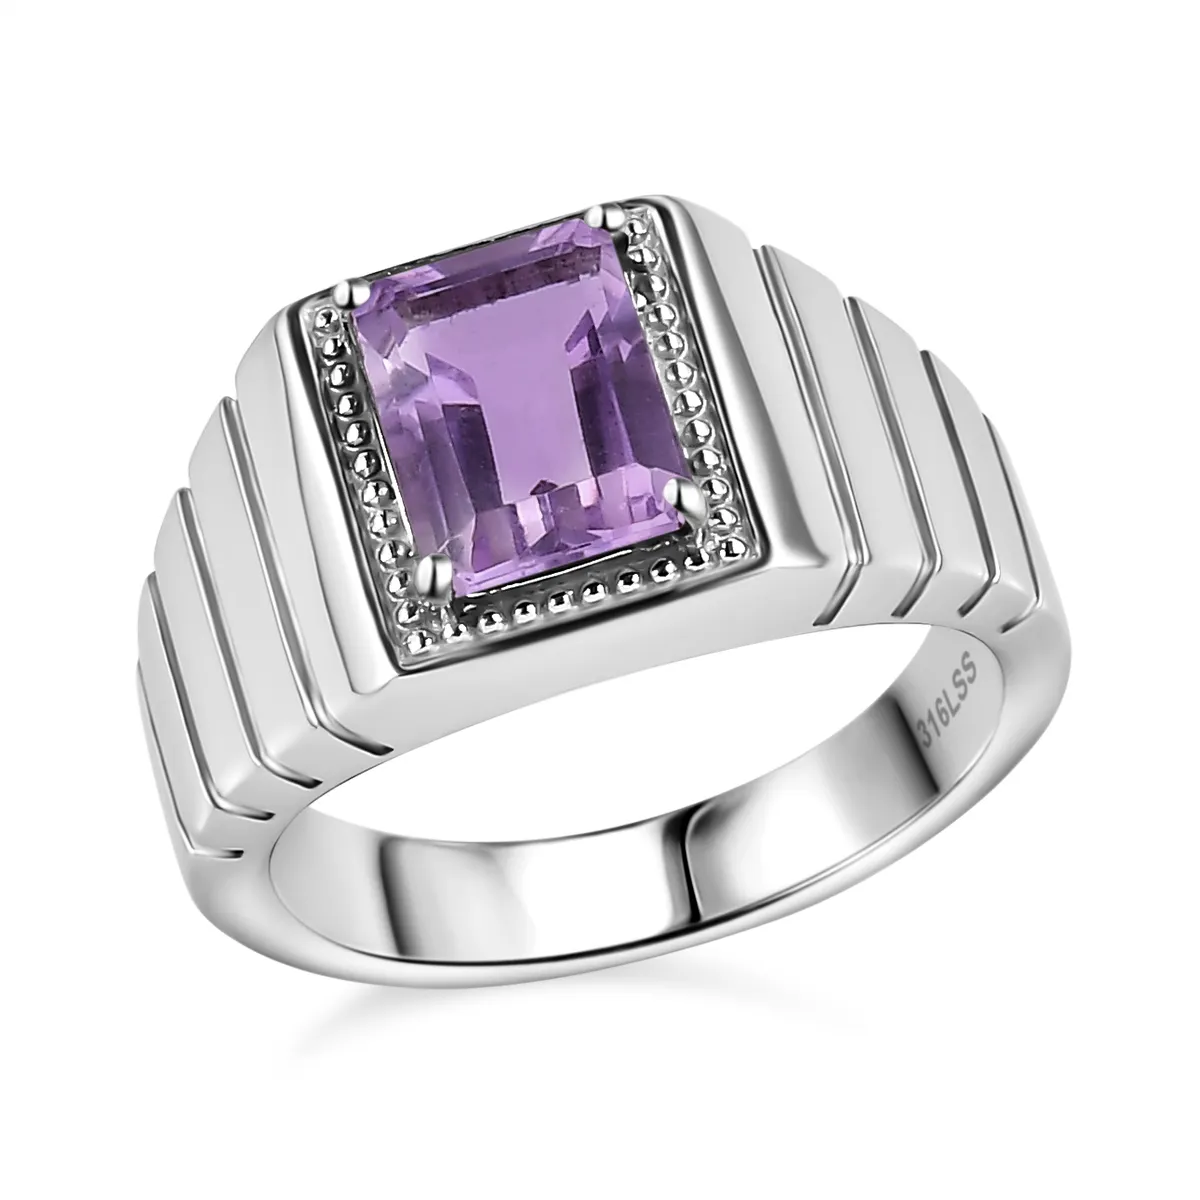 Rose De France Amethist Solitaire Heren Ring In Roestvrij Staal Groothandel Bulk Order Verkoop Hoge Kwaliteit Heren Ring